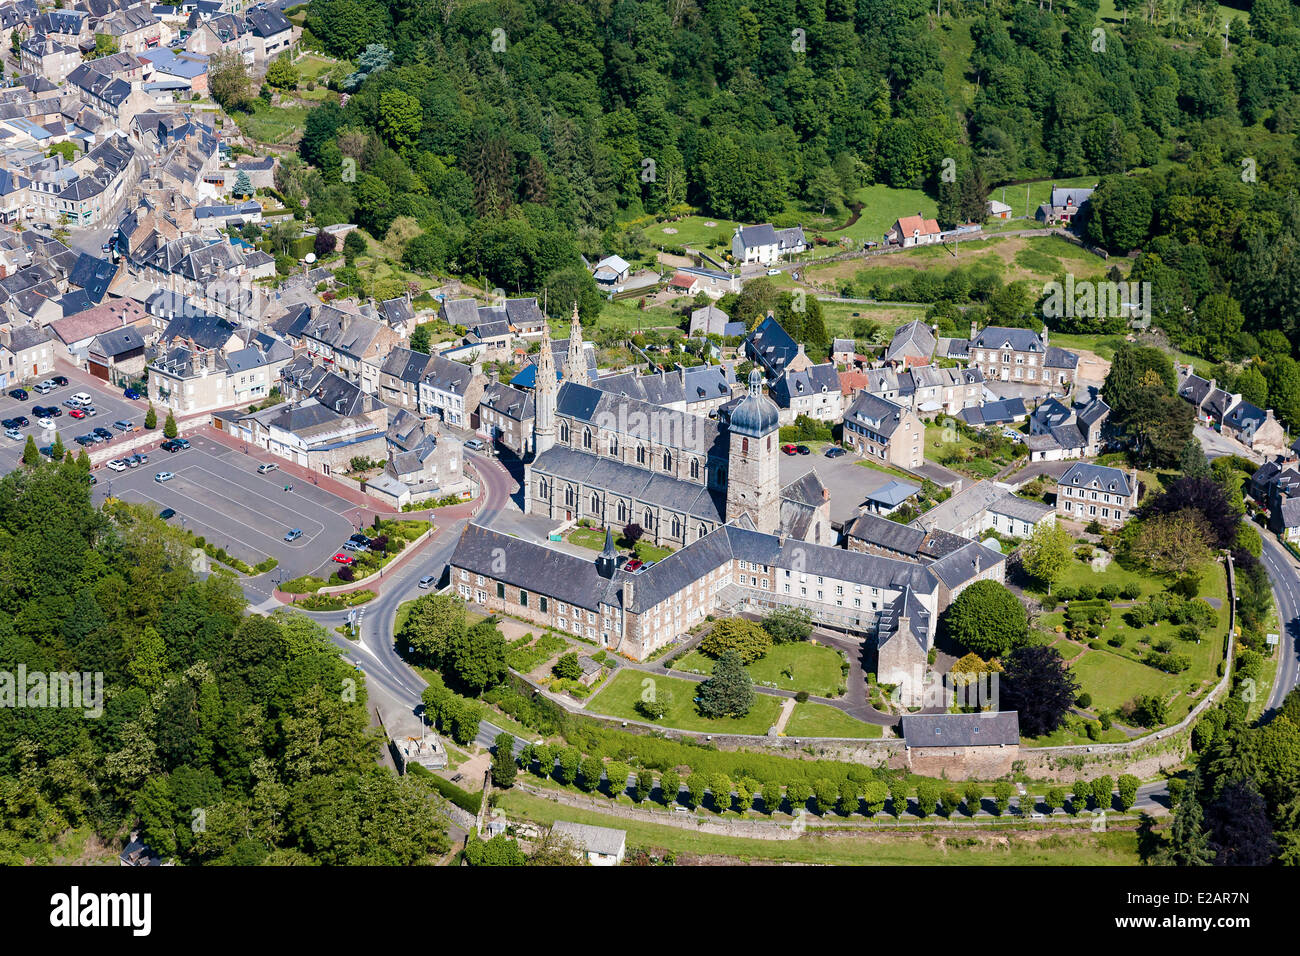 France, Manche, Saint James (aerial view) Stock Photo